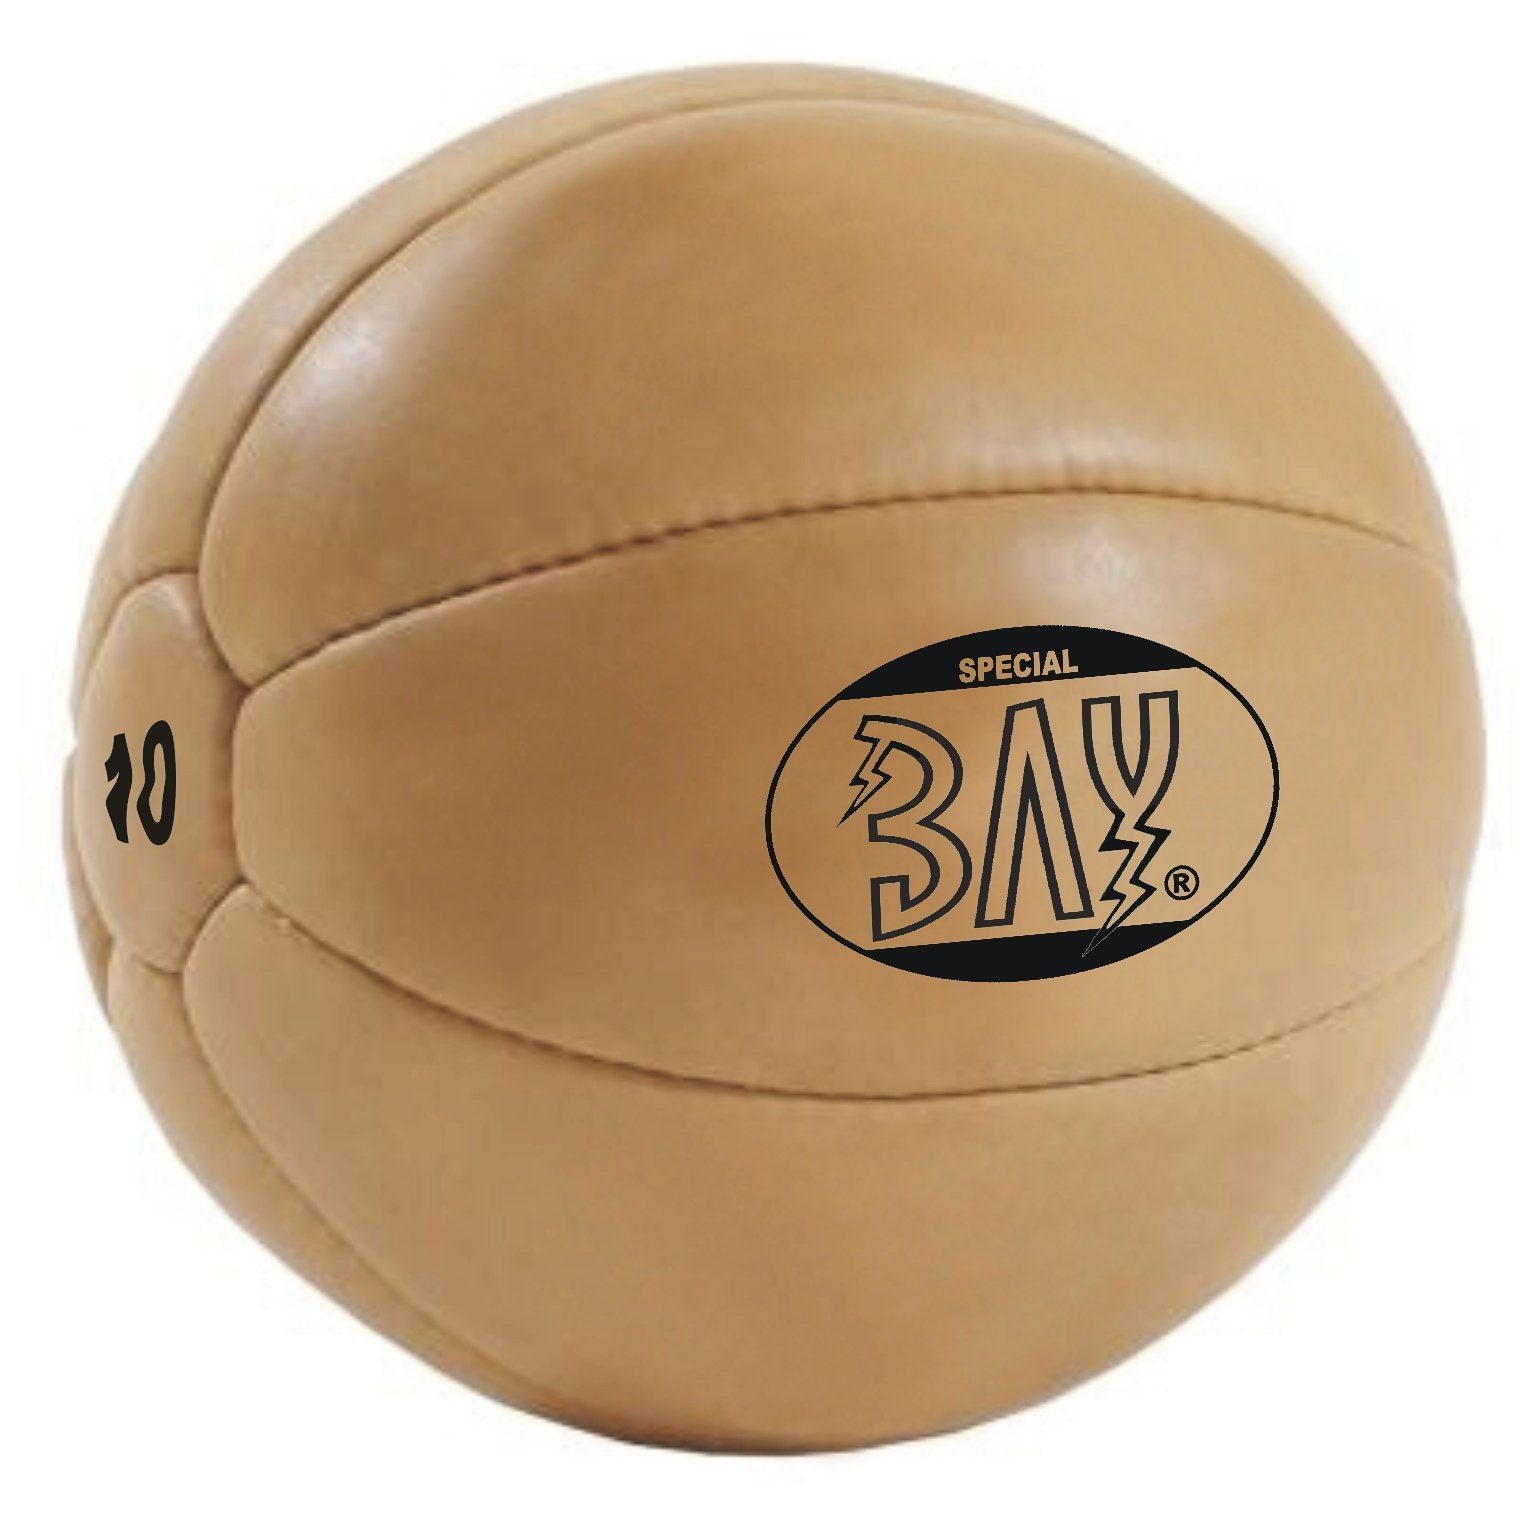 BAY-Sports Medizinball 10 Vollball 10kg Profi natur Fitnessball Kraftsport Kraftball, klassische kg Trainingsball Ausführung braun Kunstleder